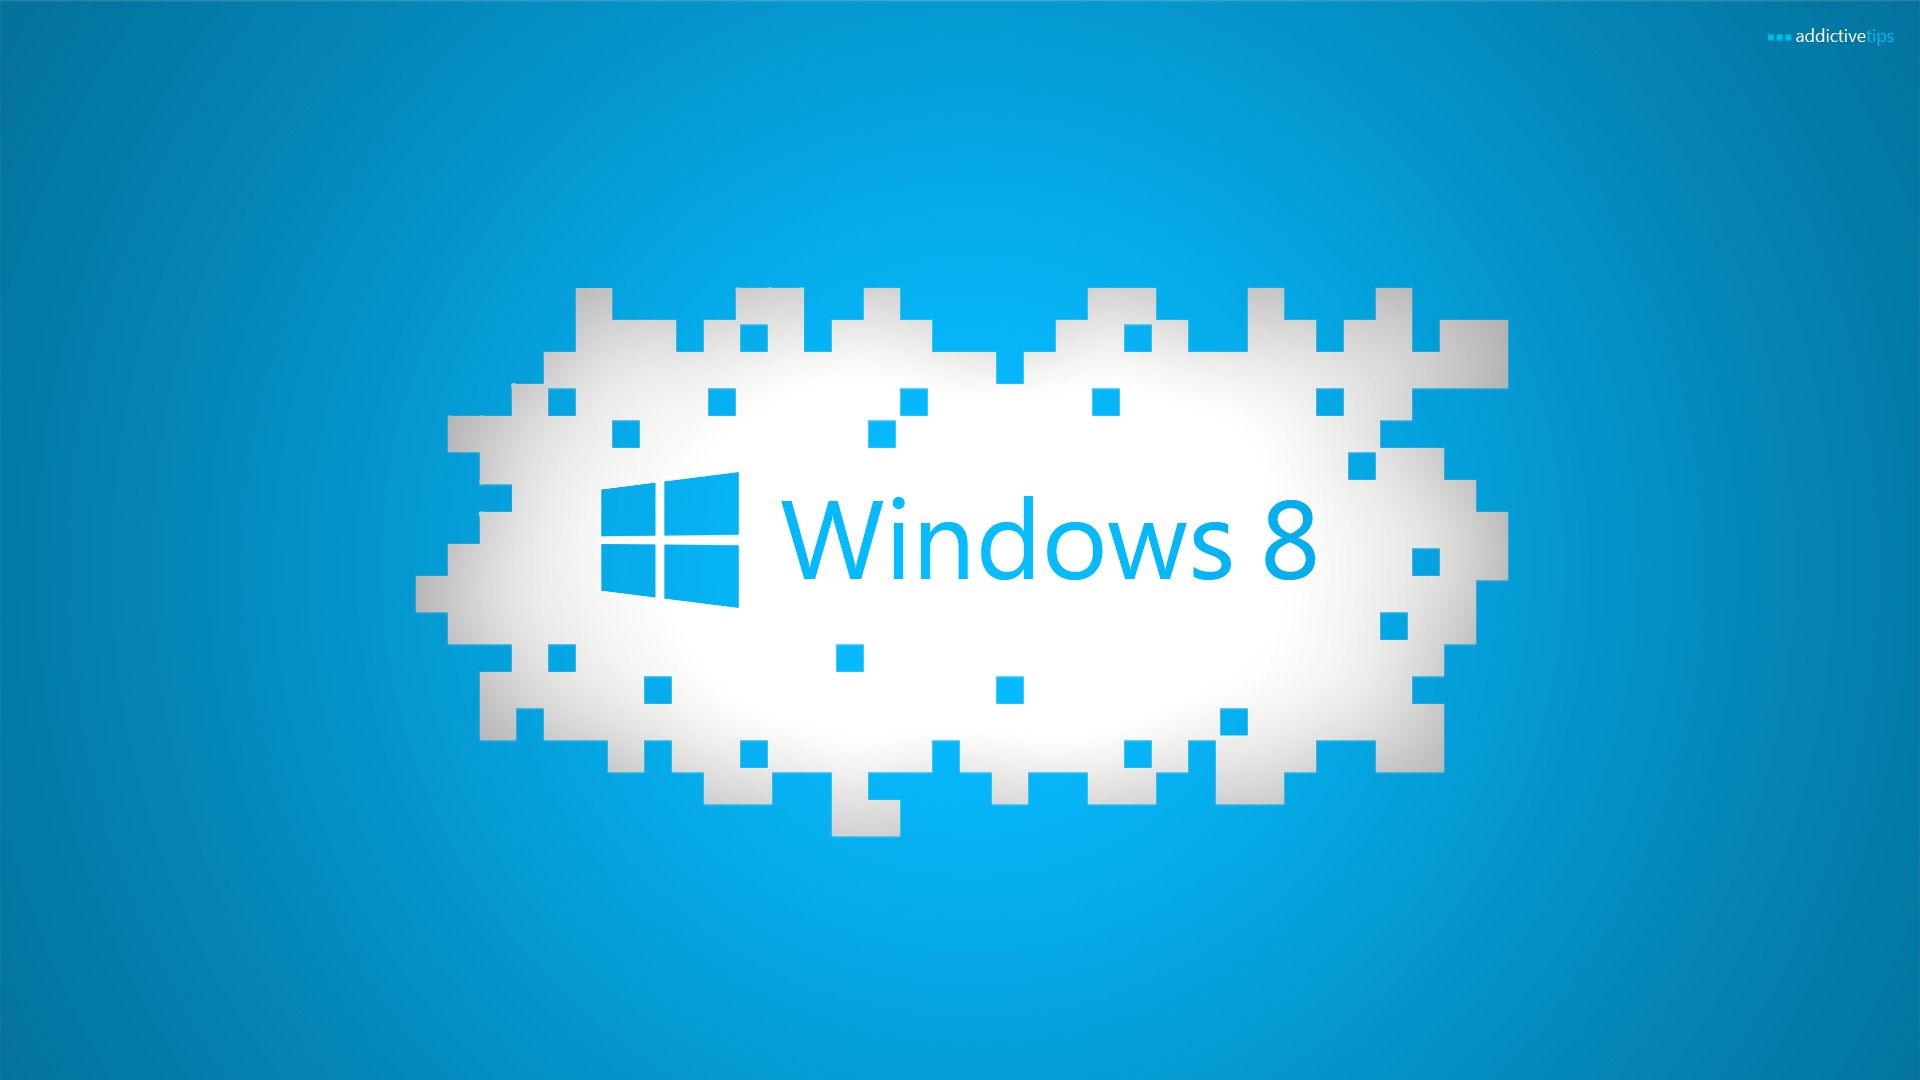 Windows 8 Wallpaper Free Download